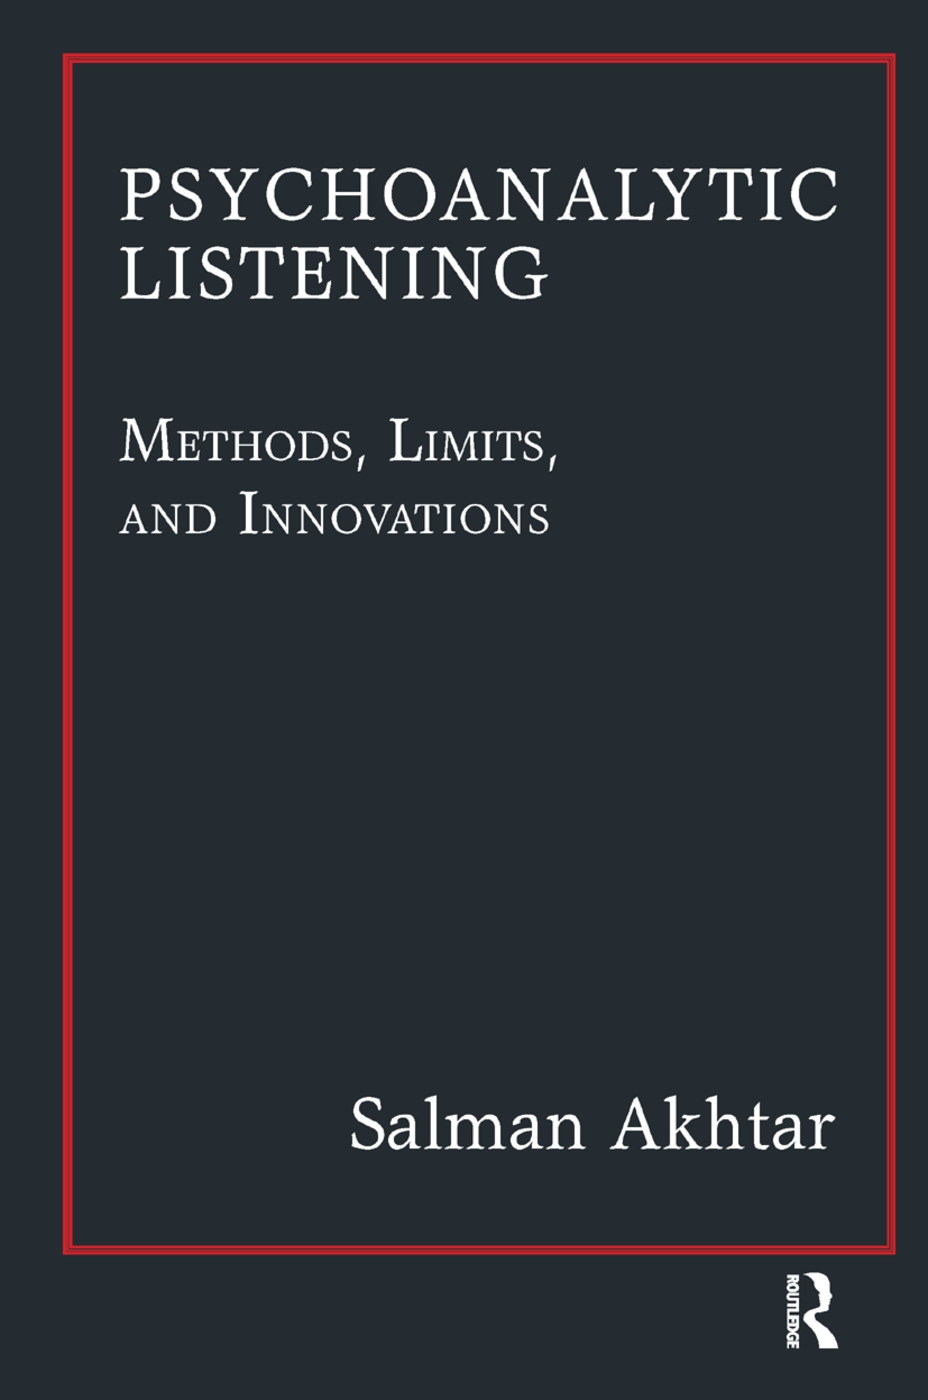 Psychoanalytic Listening: Methods, Limits, and Innovations